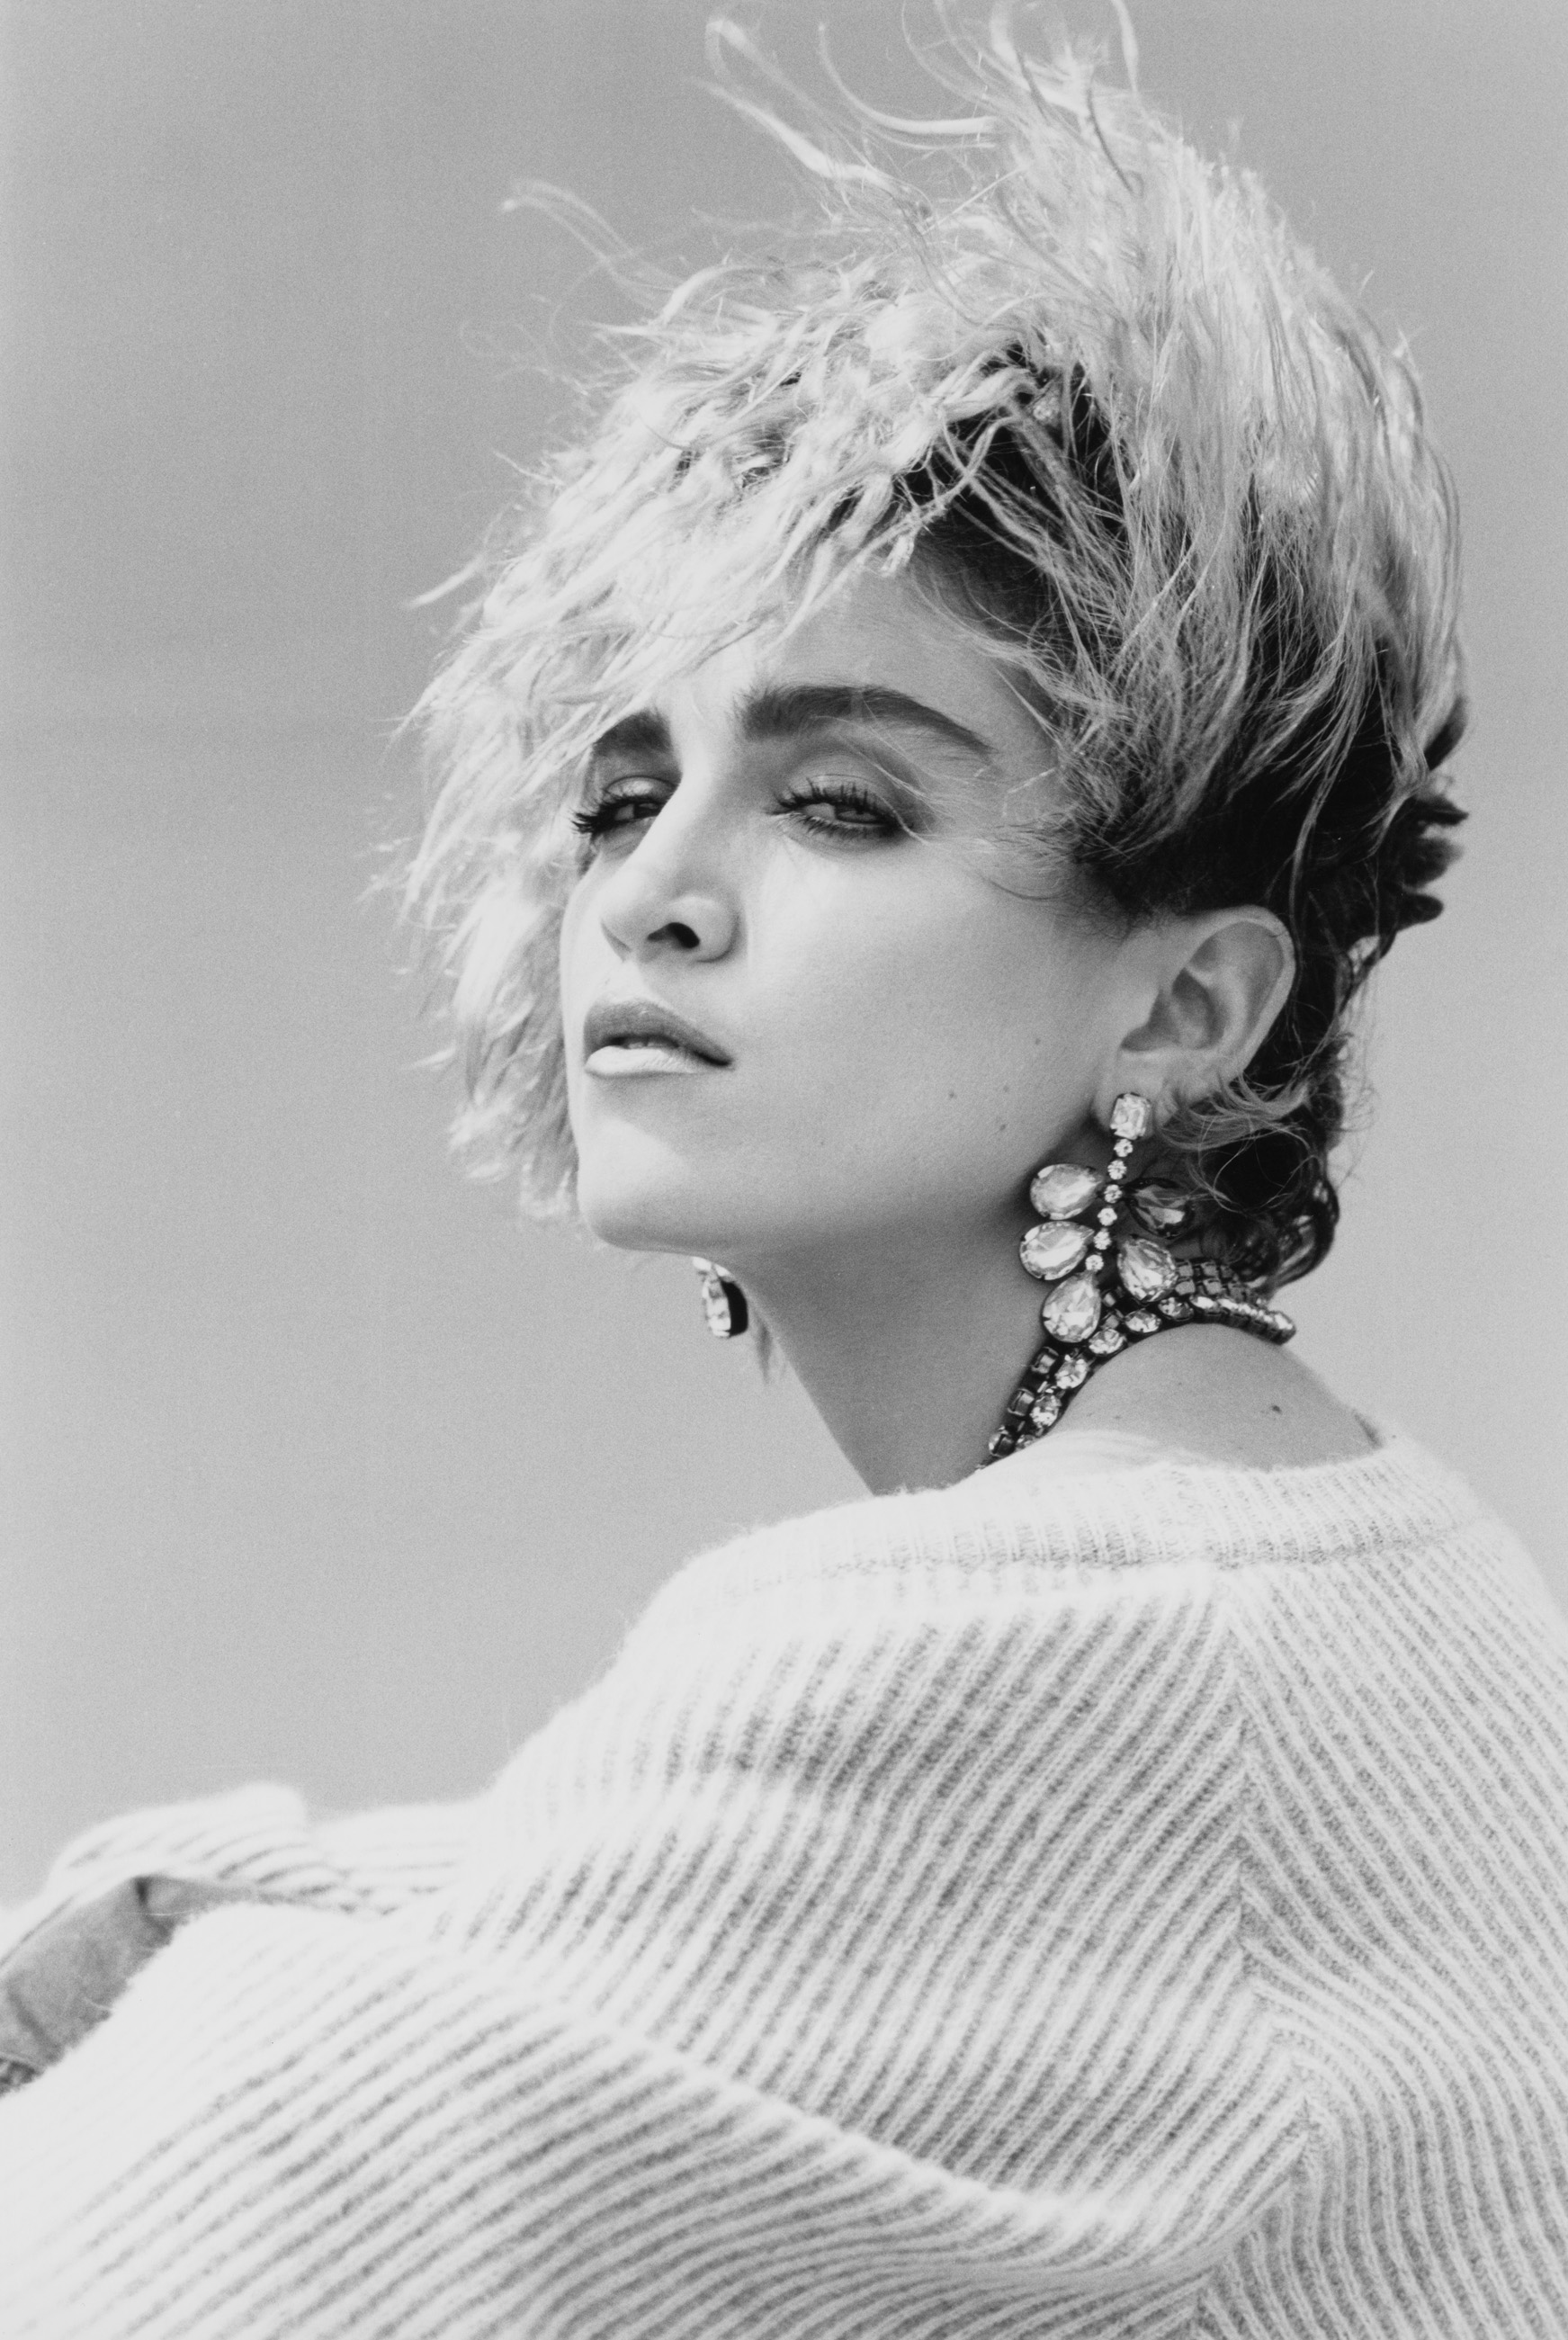 Фото Американская певица Madonna / Мадонна, фотосессия для журнала Mademoiselle, фотограф Steven Meisel / Стивен Майзел